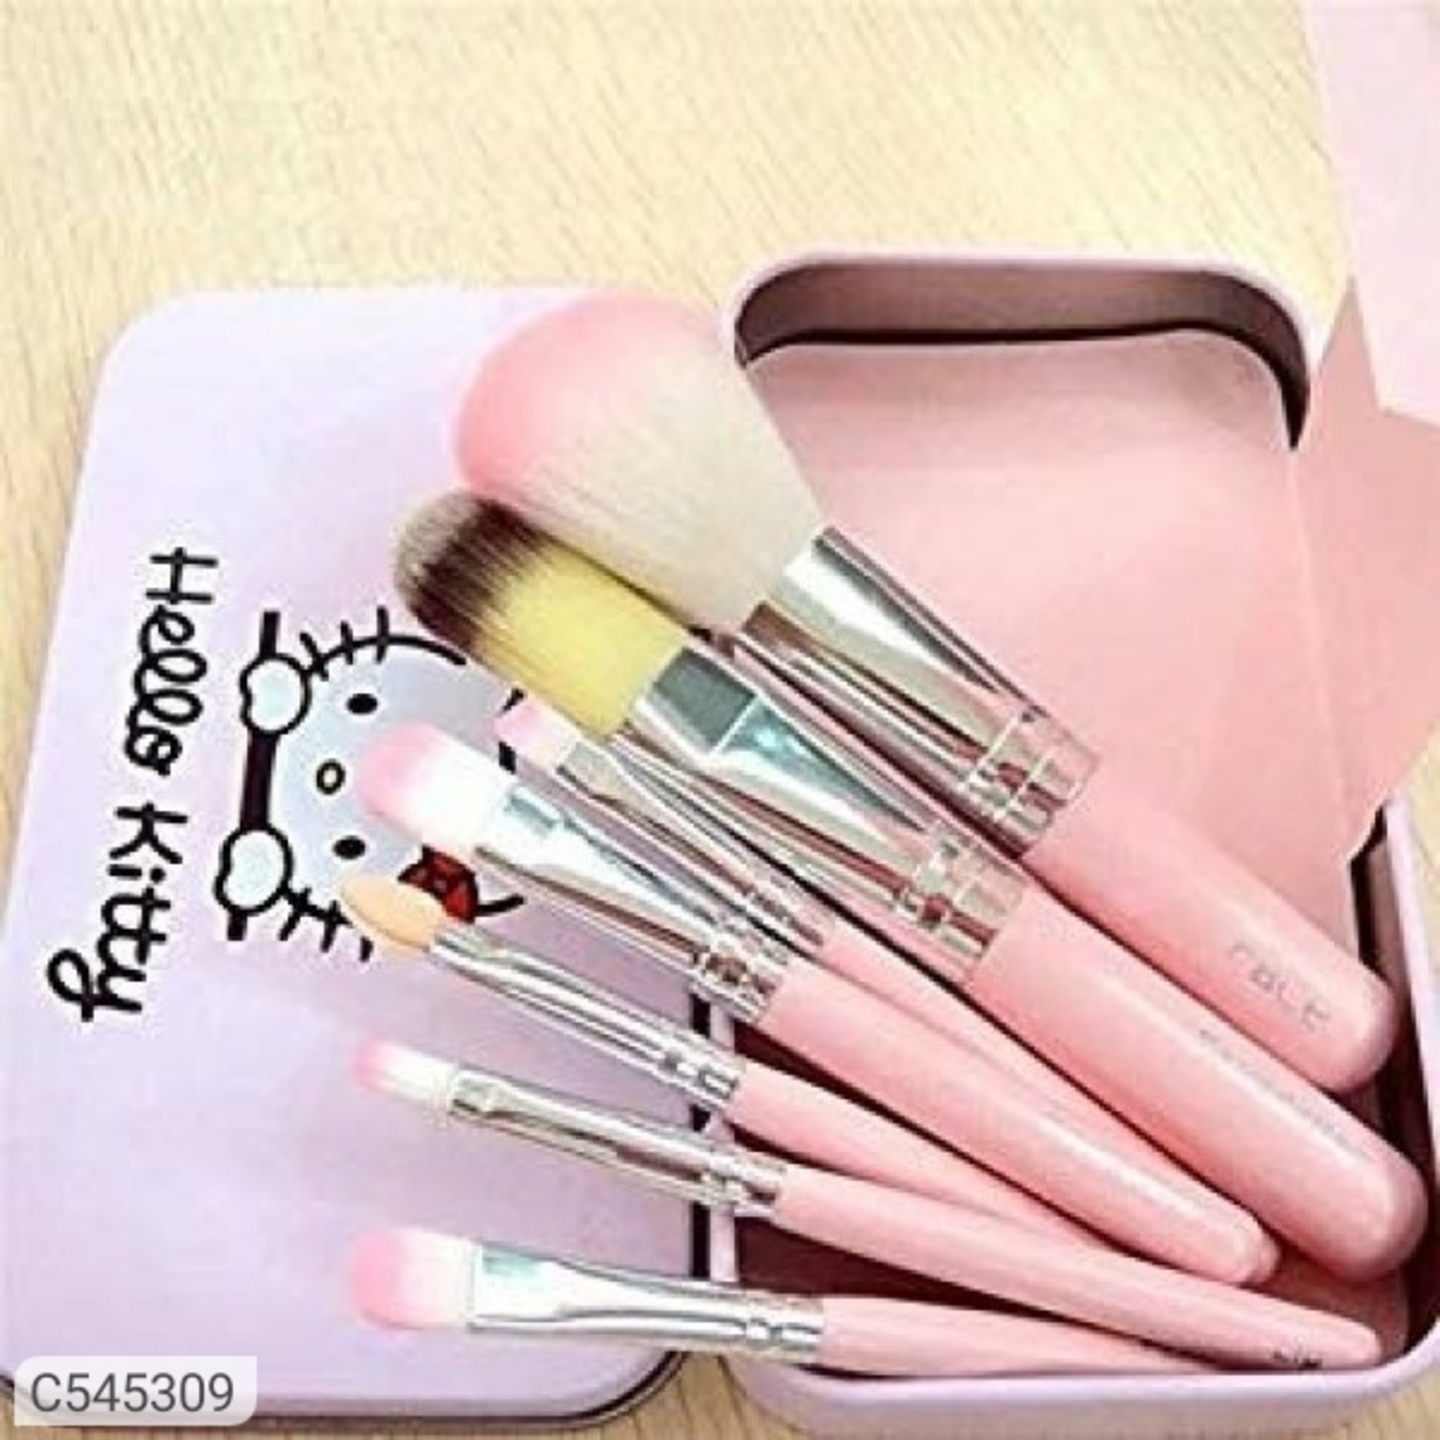 Hello Kitty Make-Up Brush Set Of 7